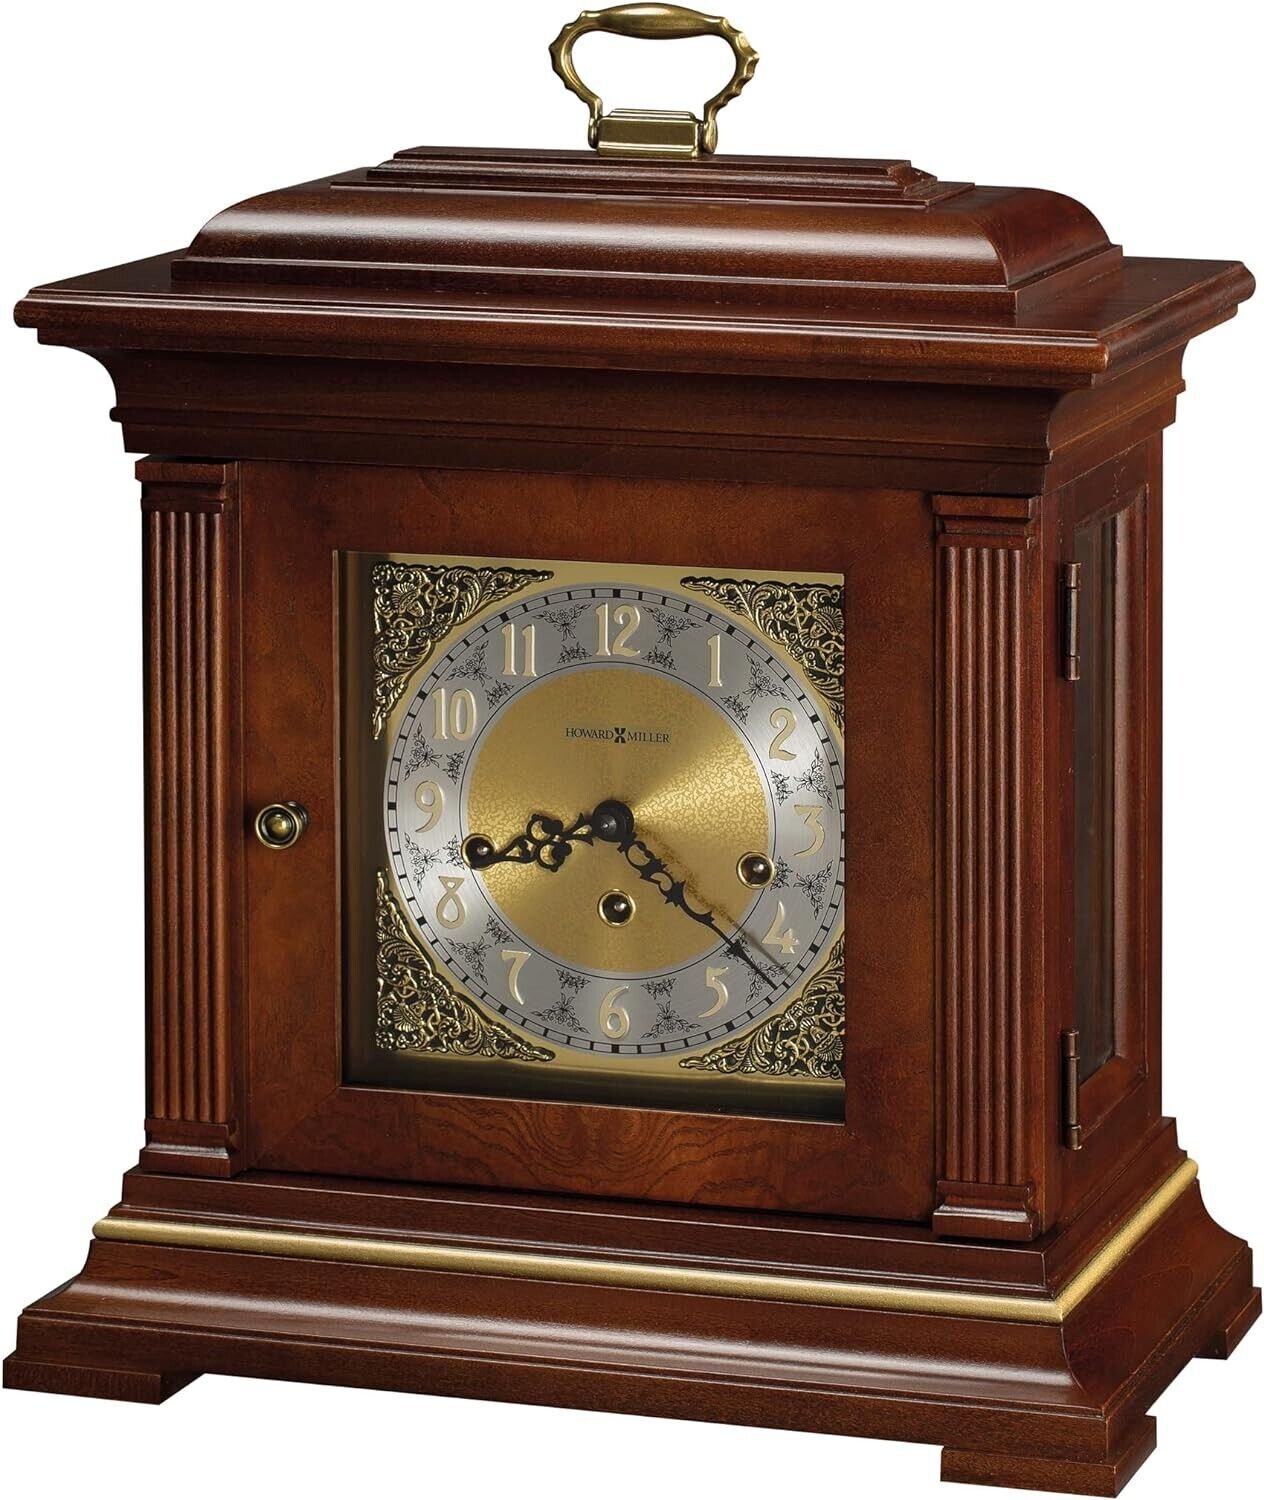 Howard Miller Thomas Tompion Mantel Clock 612-436 – Windsor Cherry